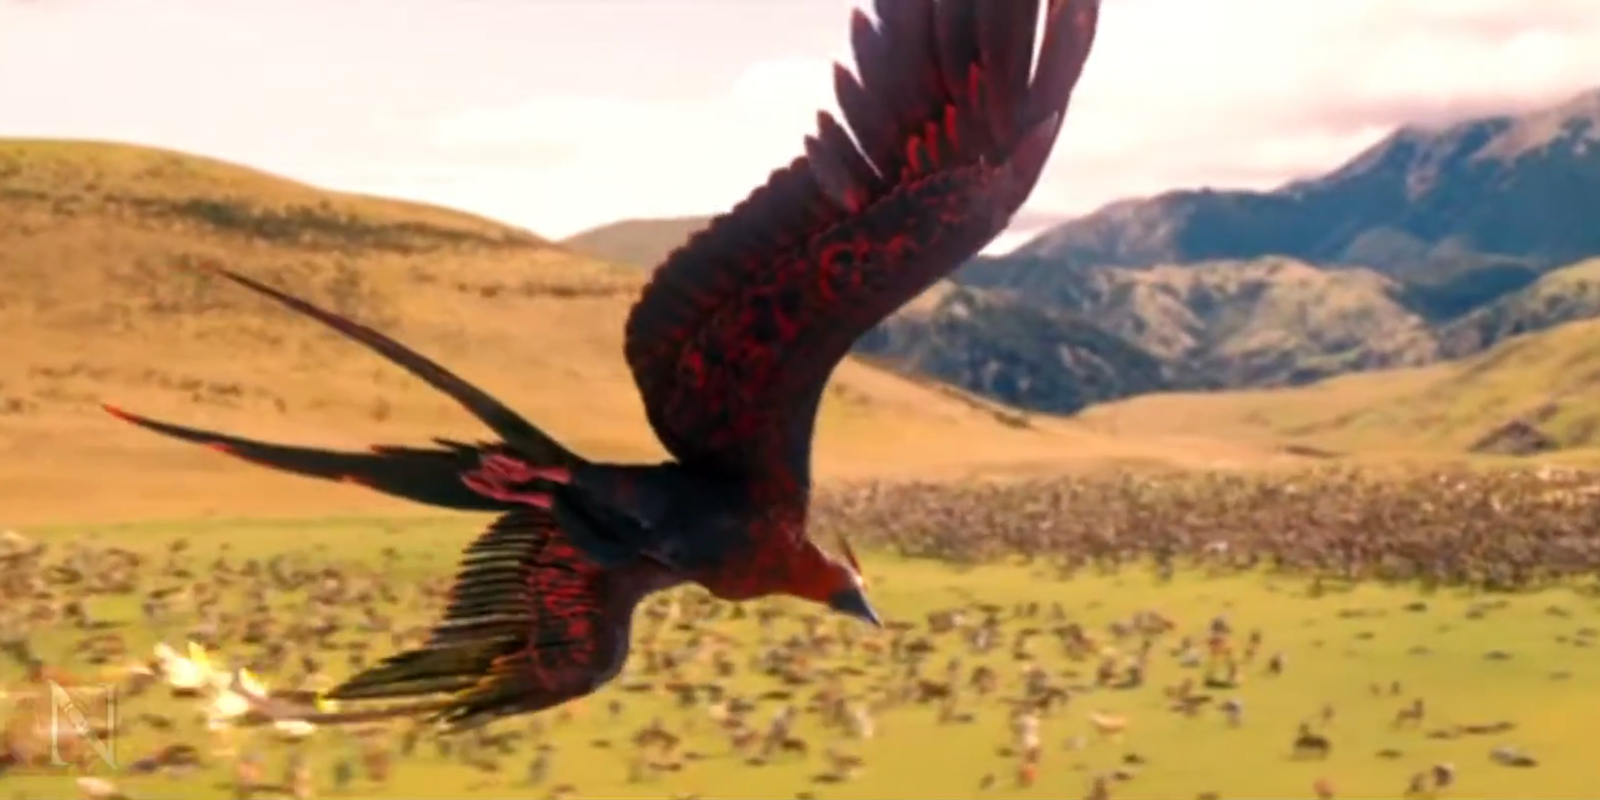 The phoenix flies in The Chronicles of Narnia Battle of Beruna scene